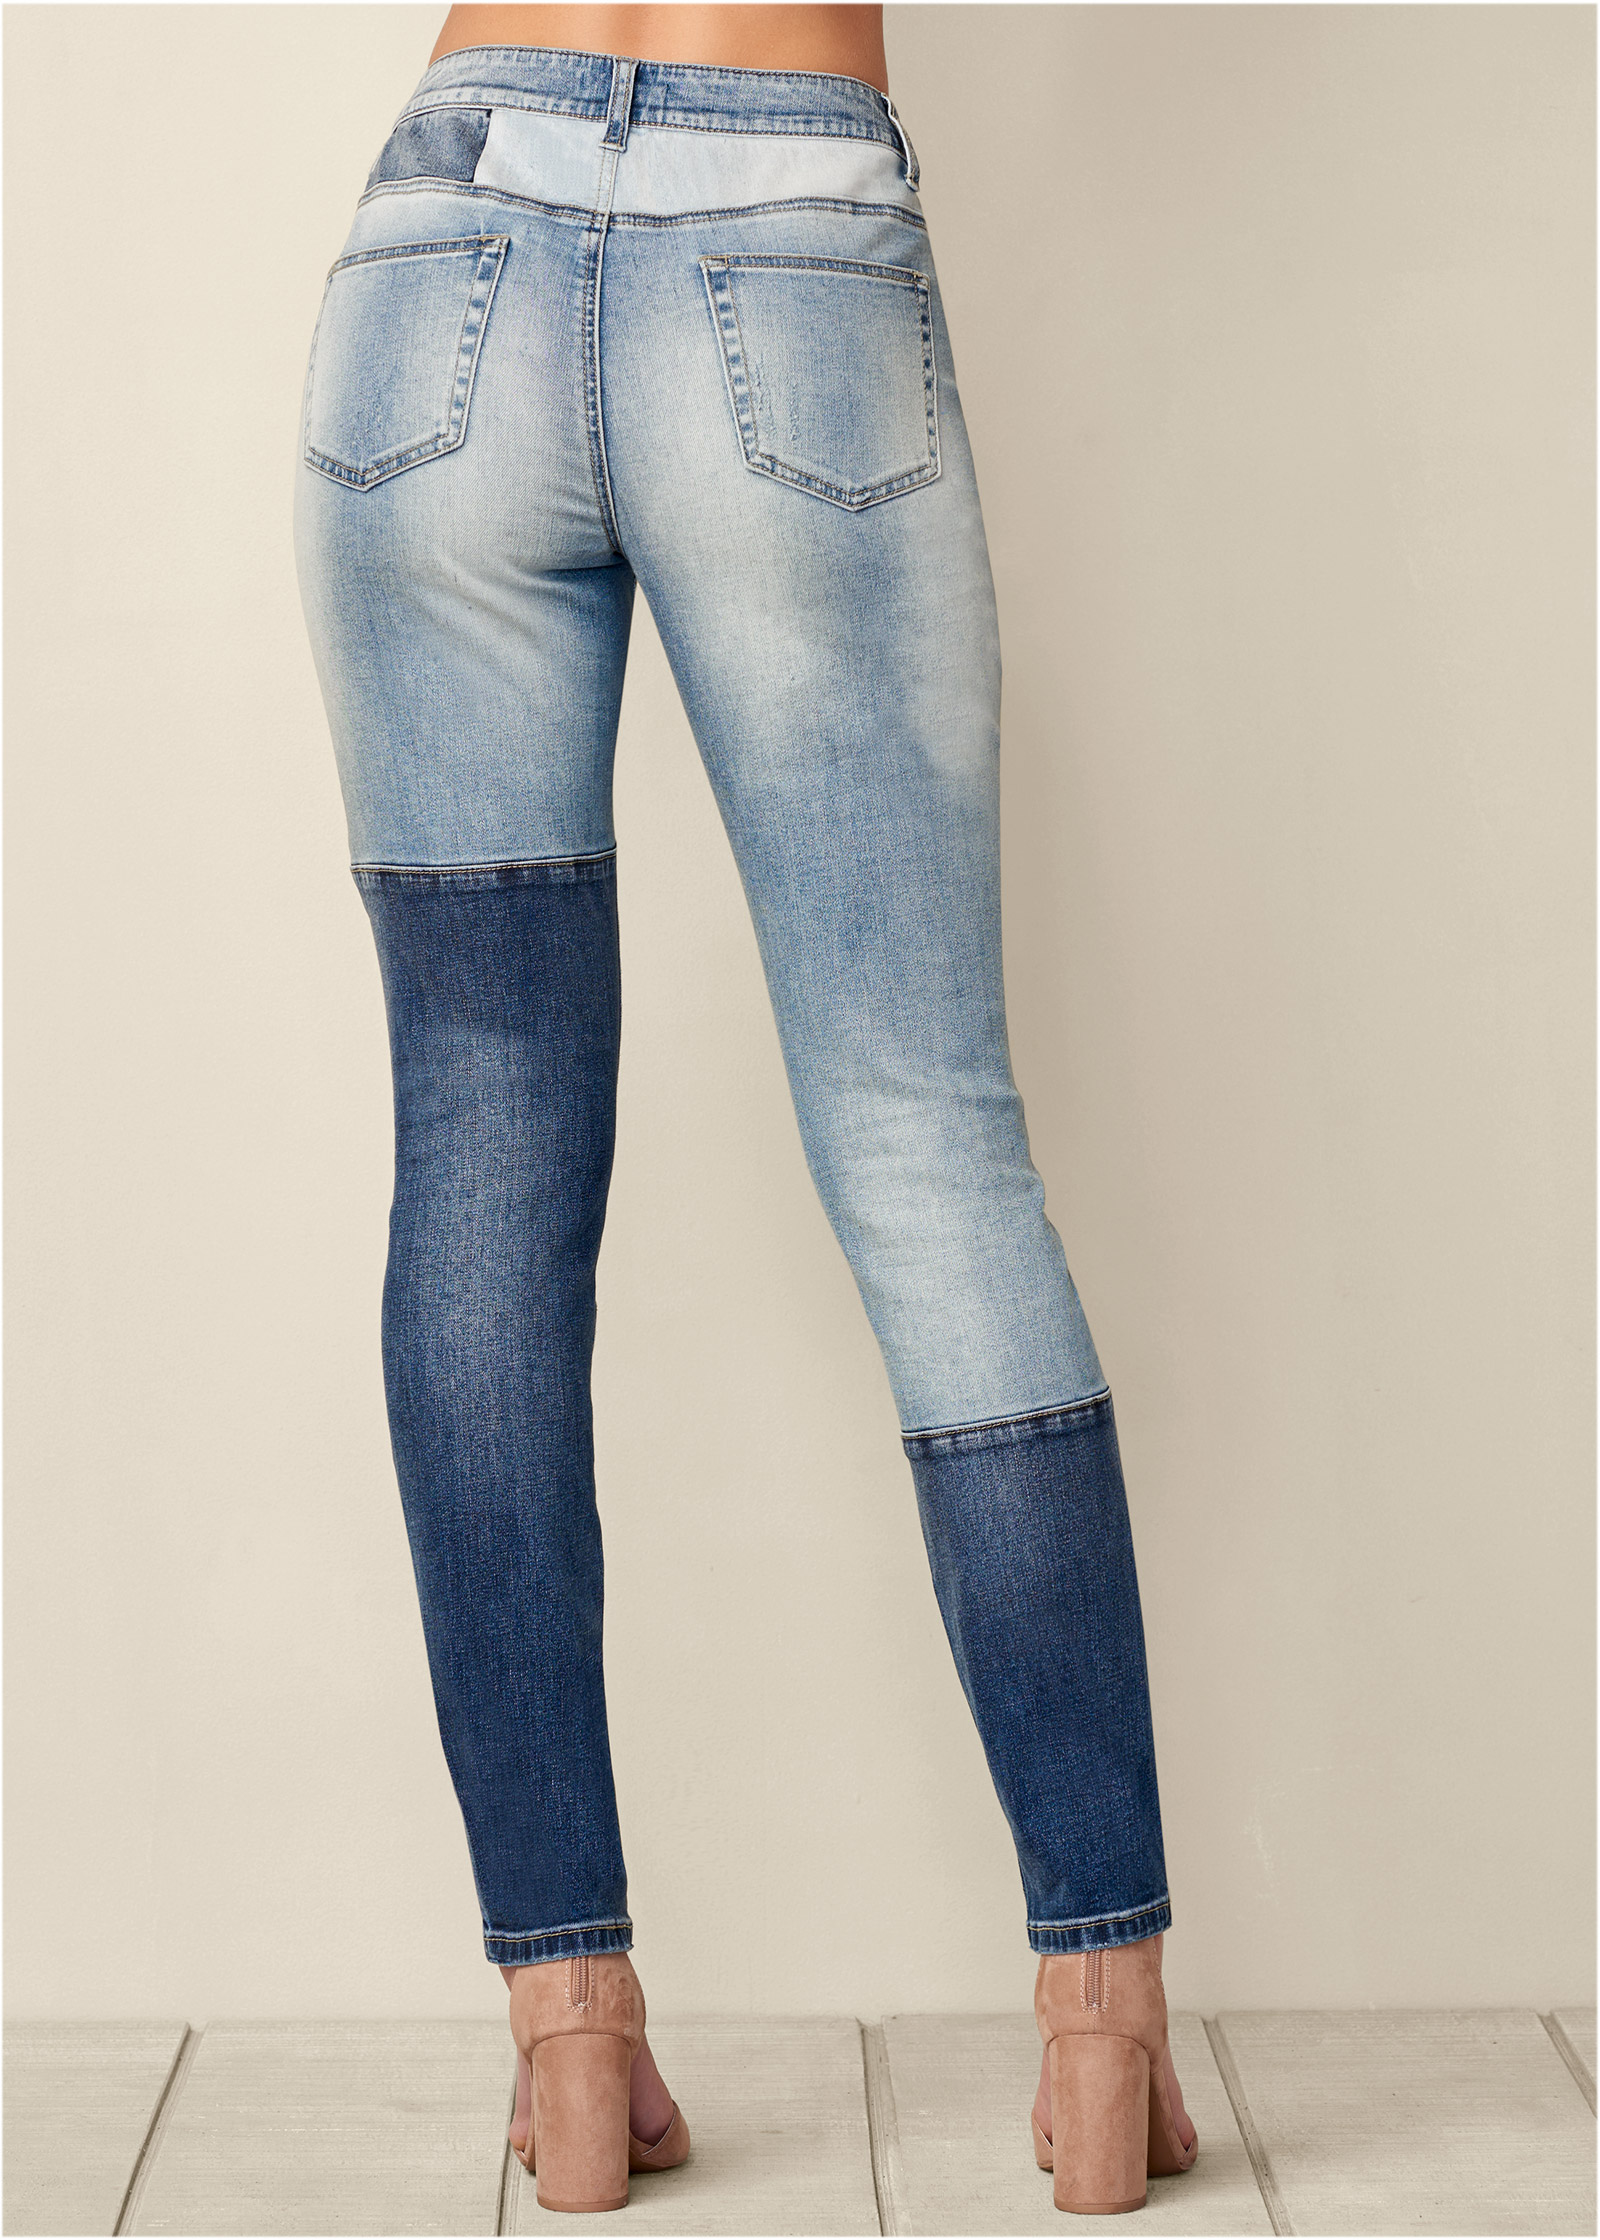 venus patchwork jeans